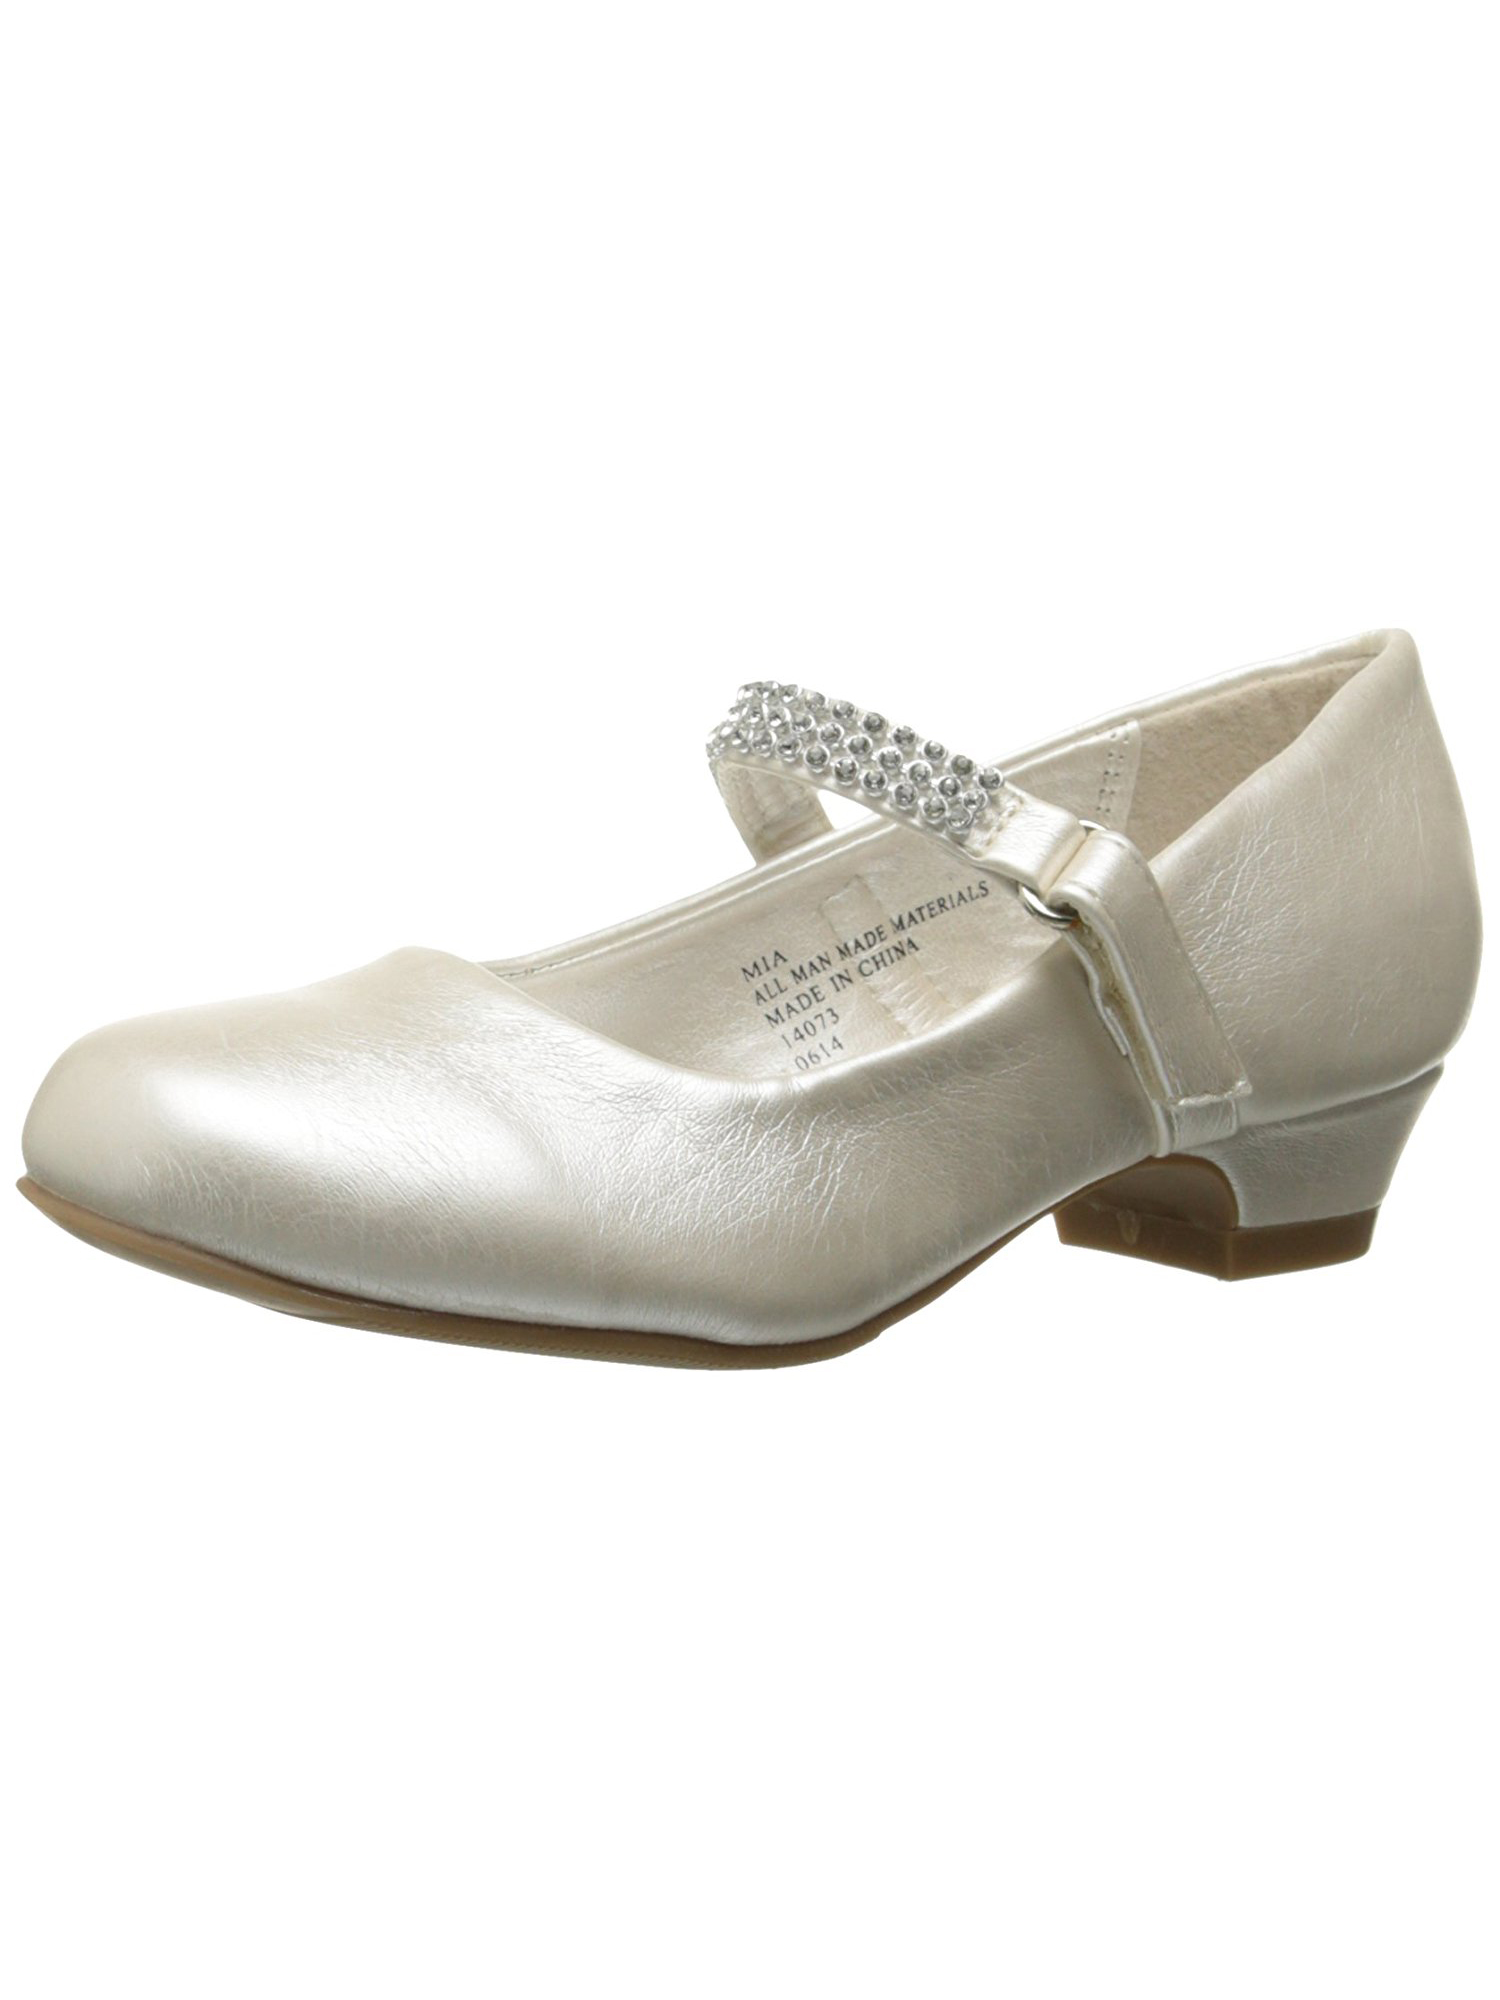 Girls Low Heel Dress Shoe With Rhinestone Strap (9, White)